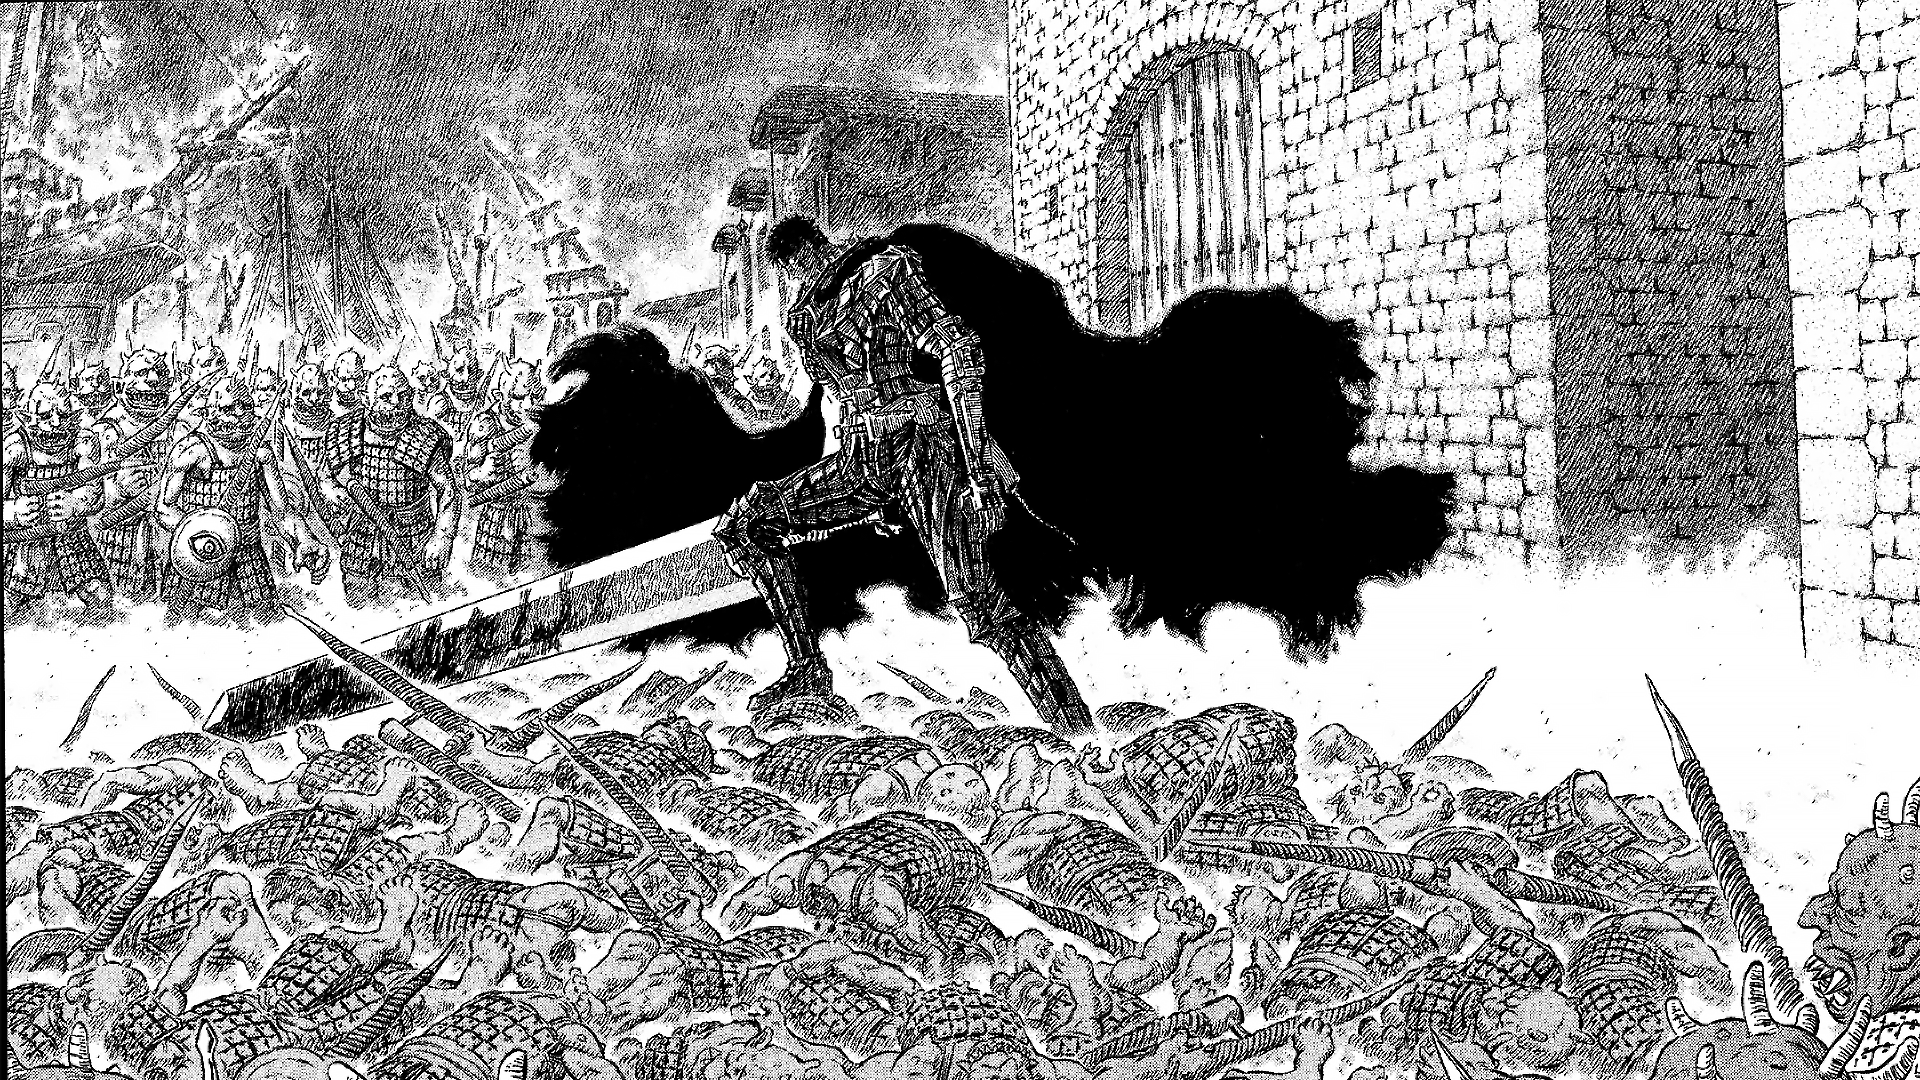 Kentaro Miura dead: Creator of iconic manga Berserk dies at 54